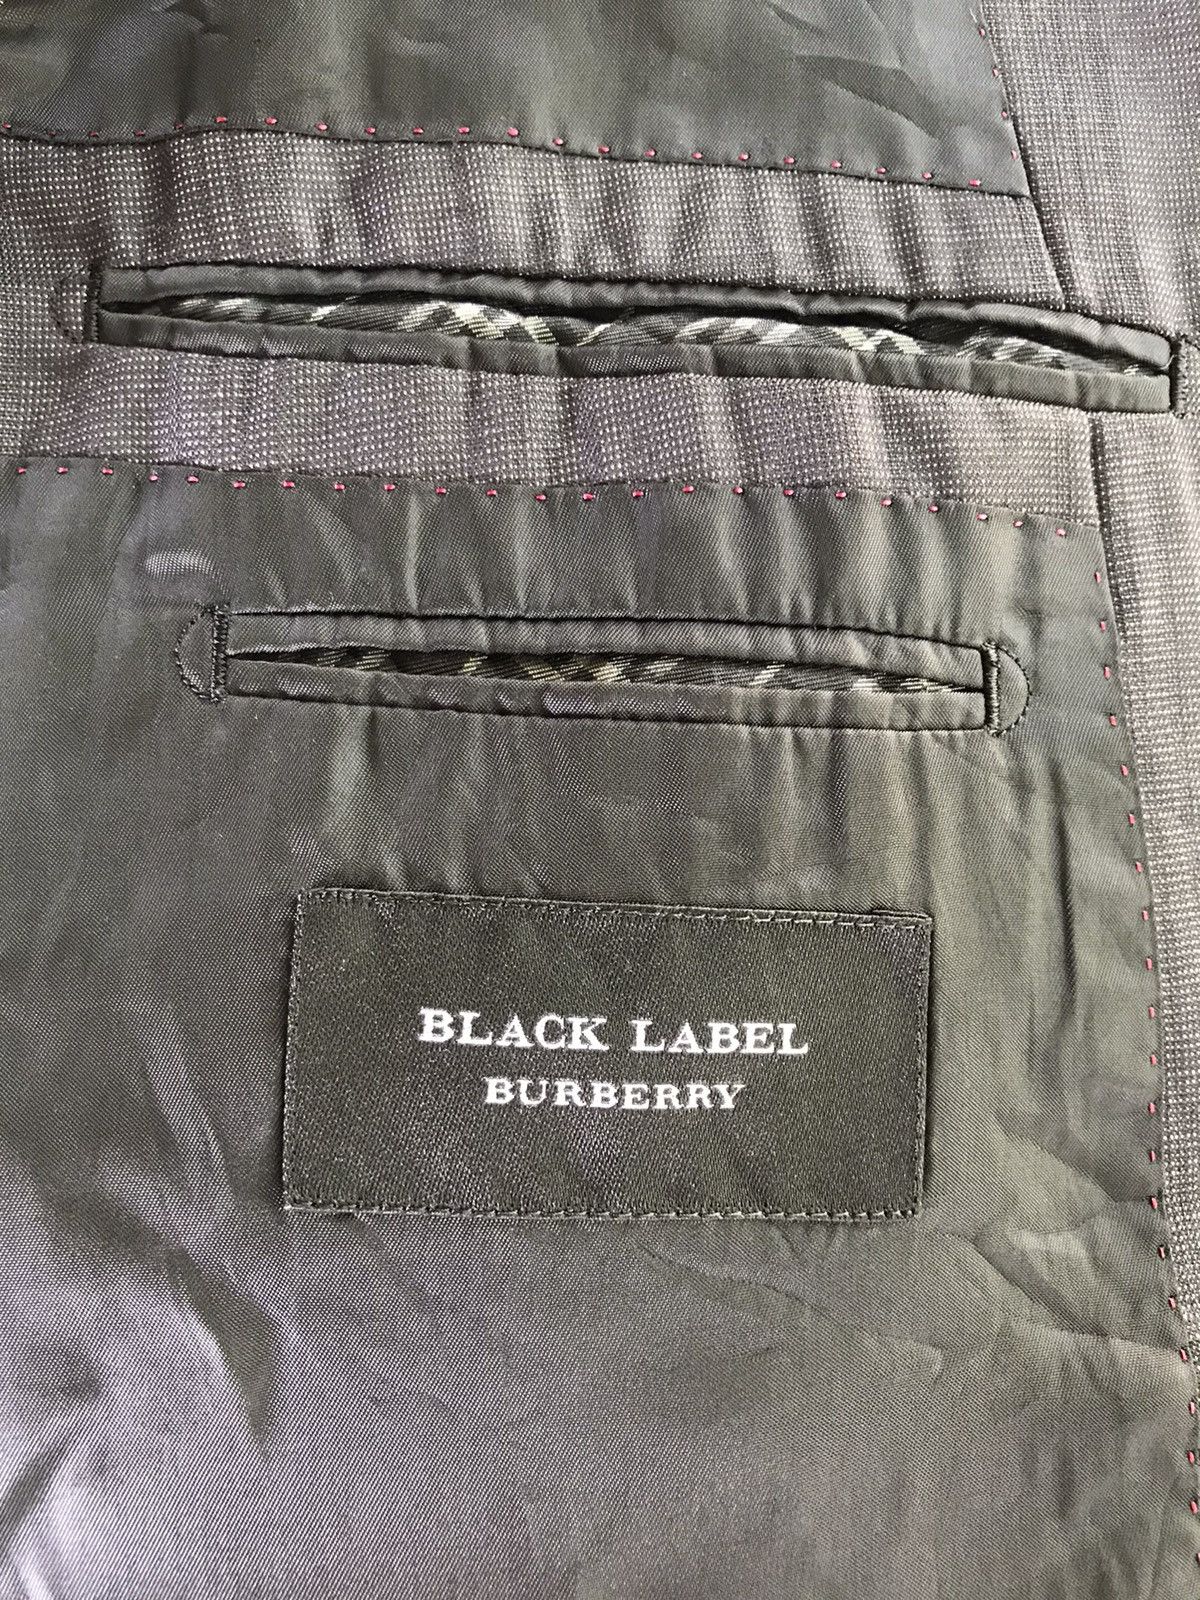 Burberry Black Label Blazer - 2